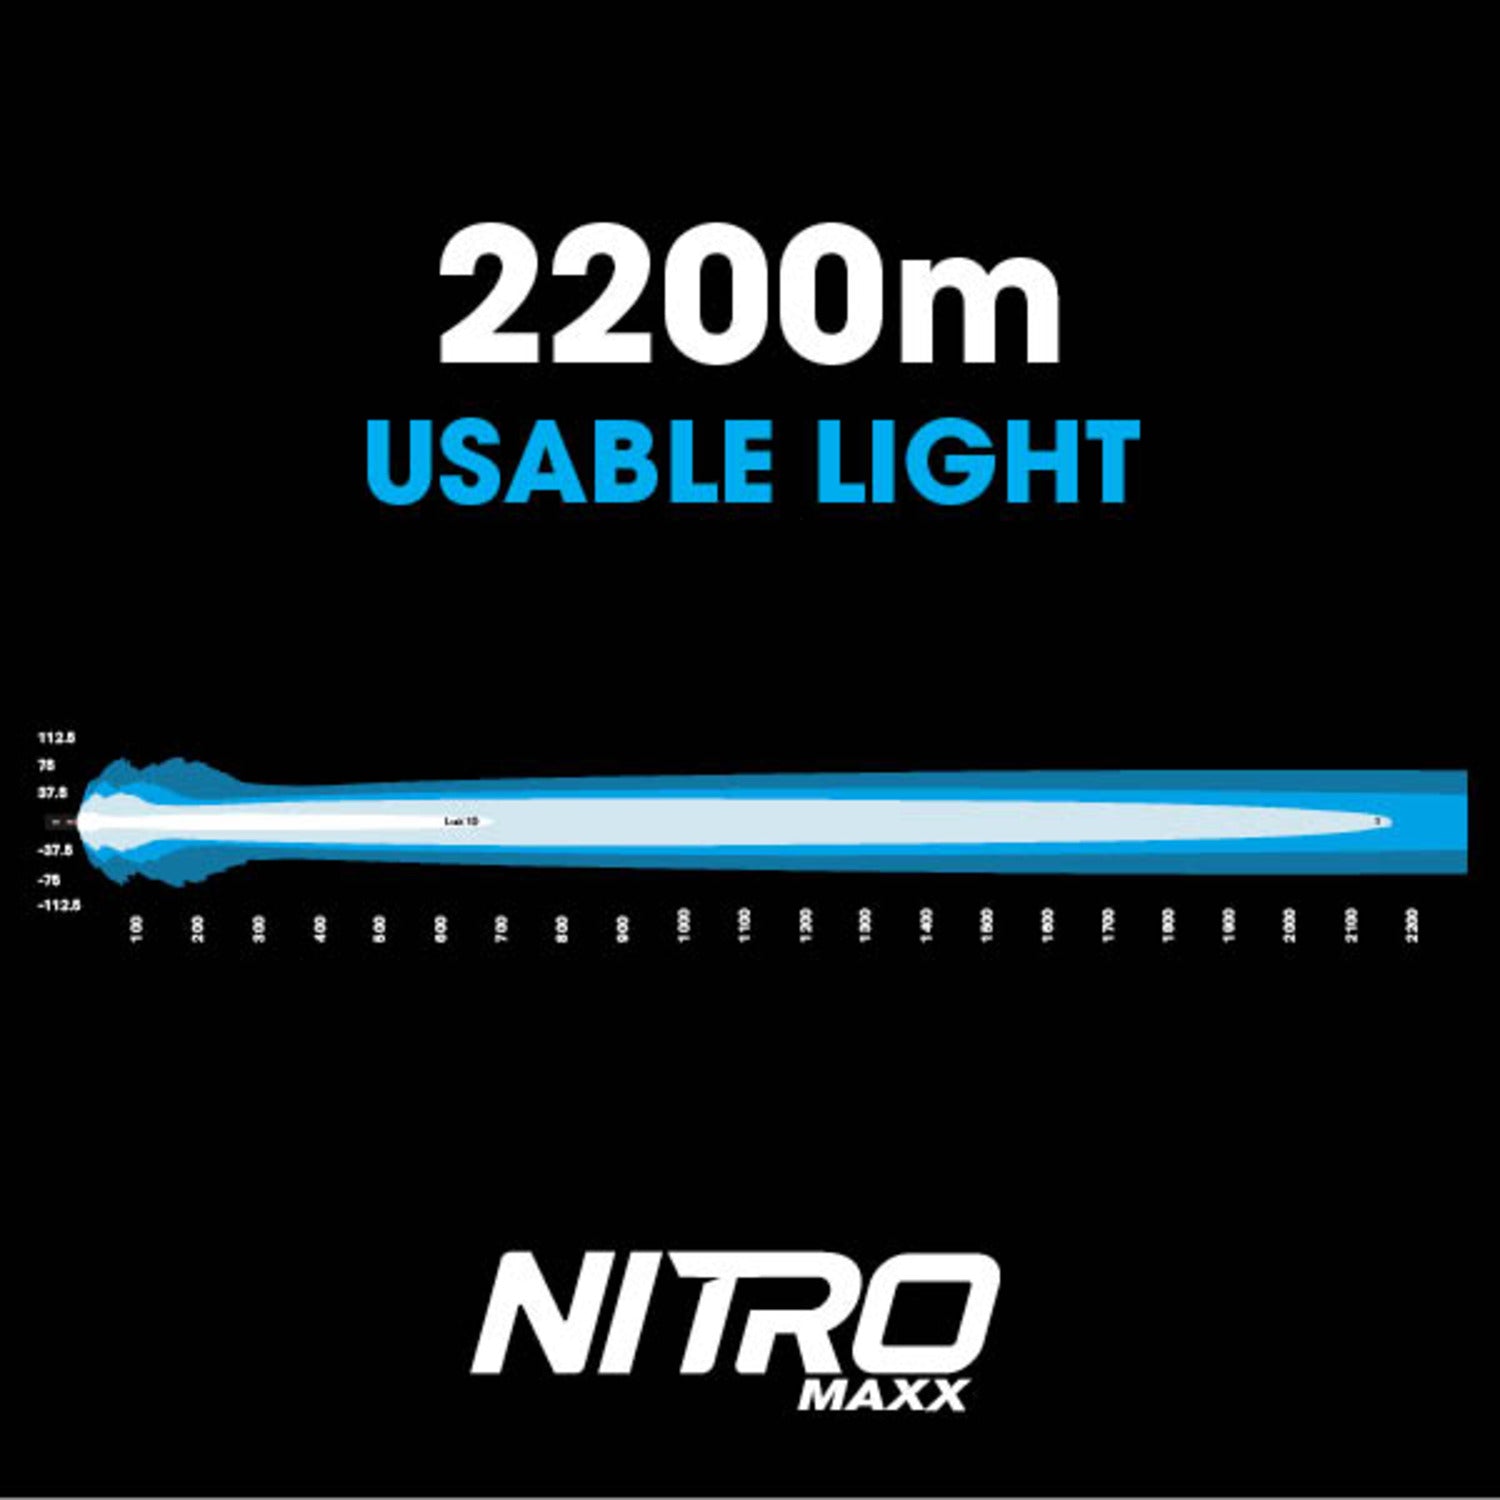 Nitro 180 Maxx 9 Led Driving Light Pair - Widr - 5700k - Black Rim Incs Harness And Atns